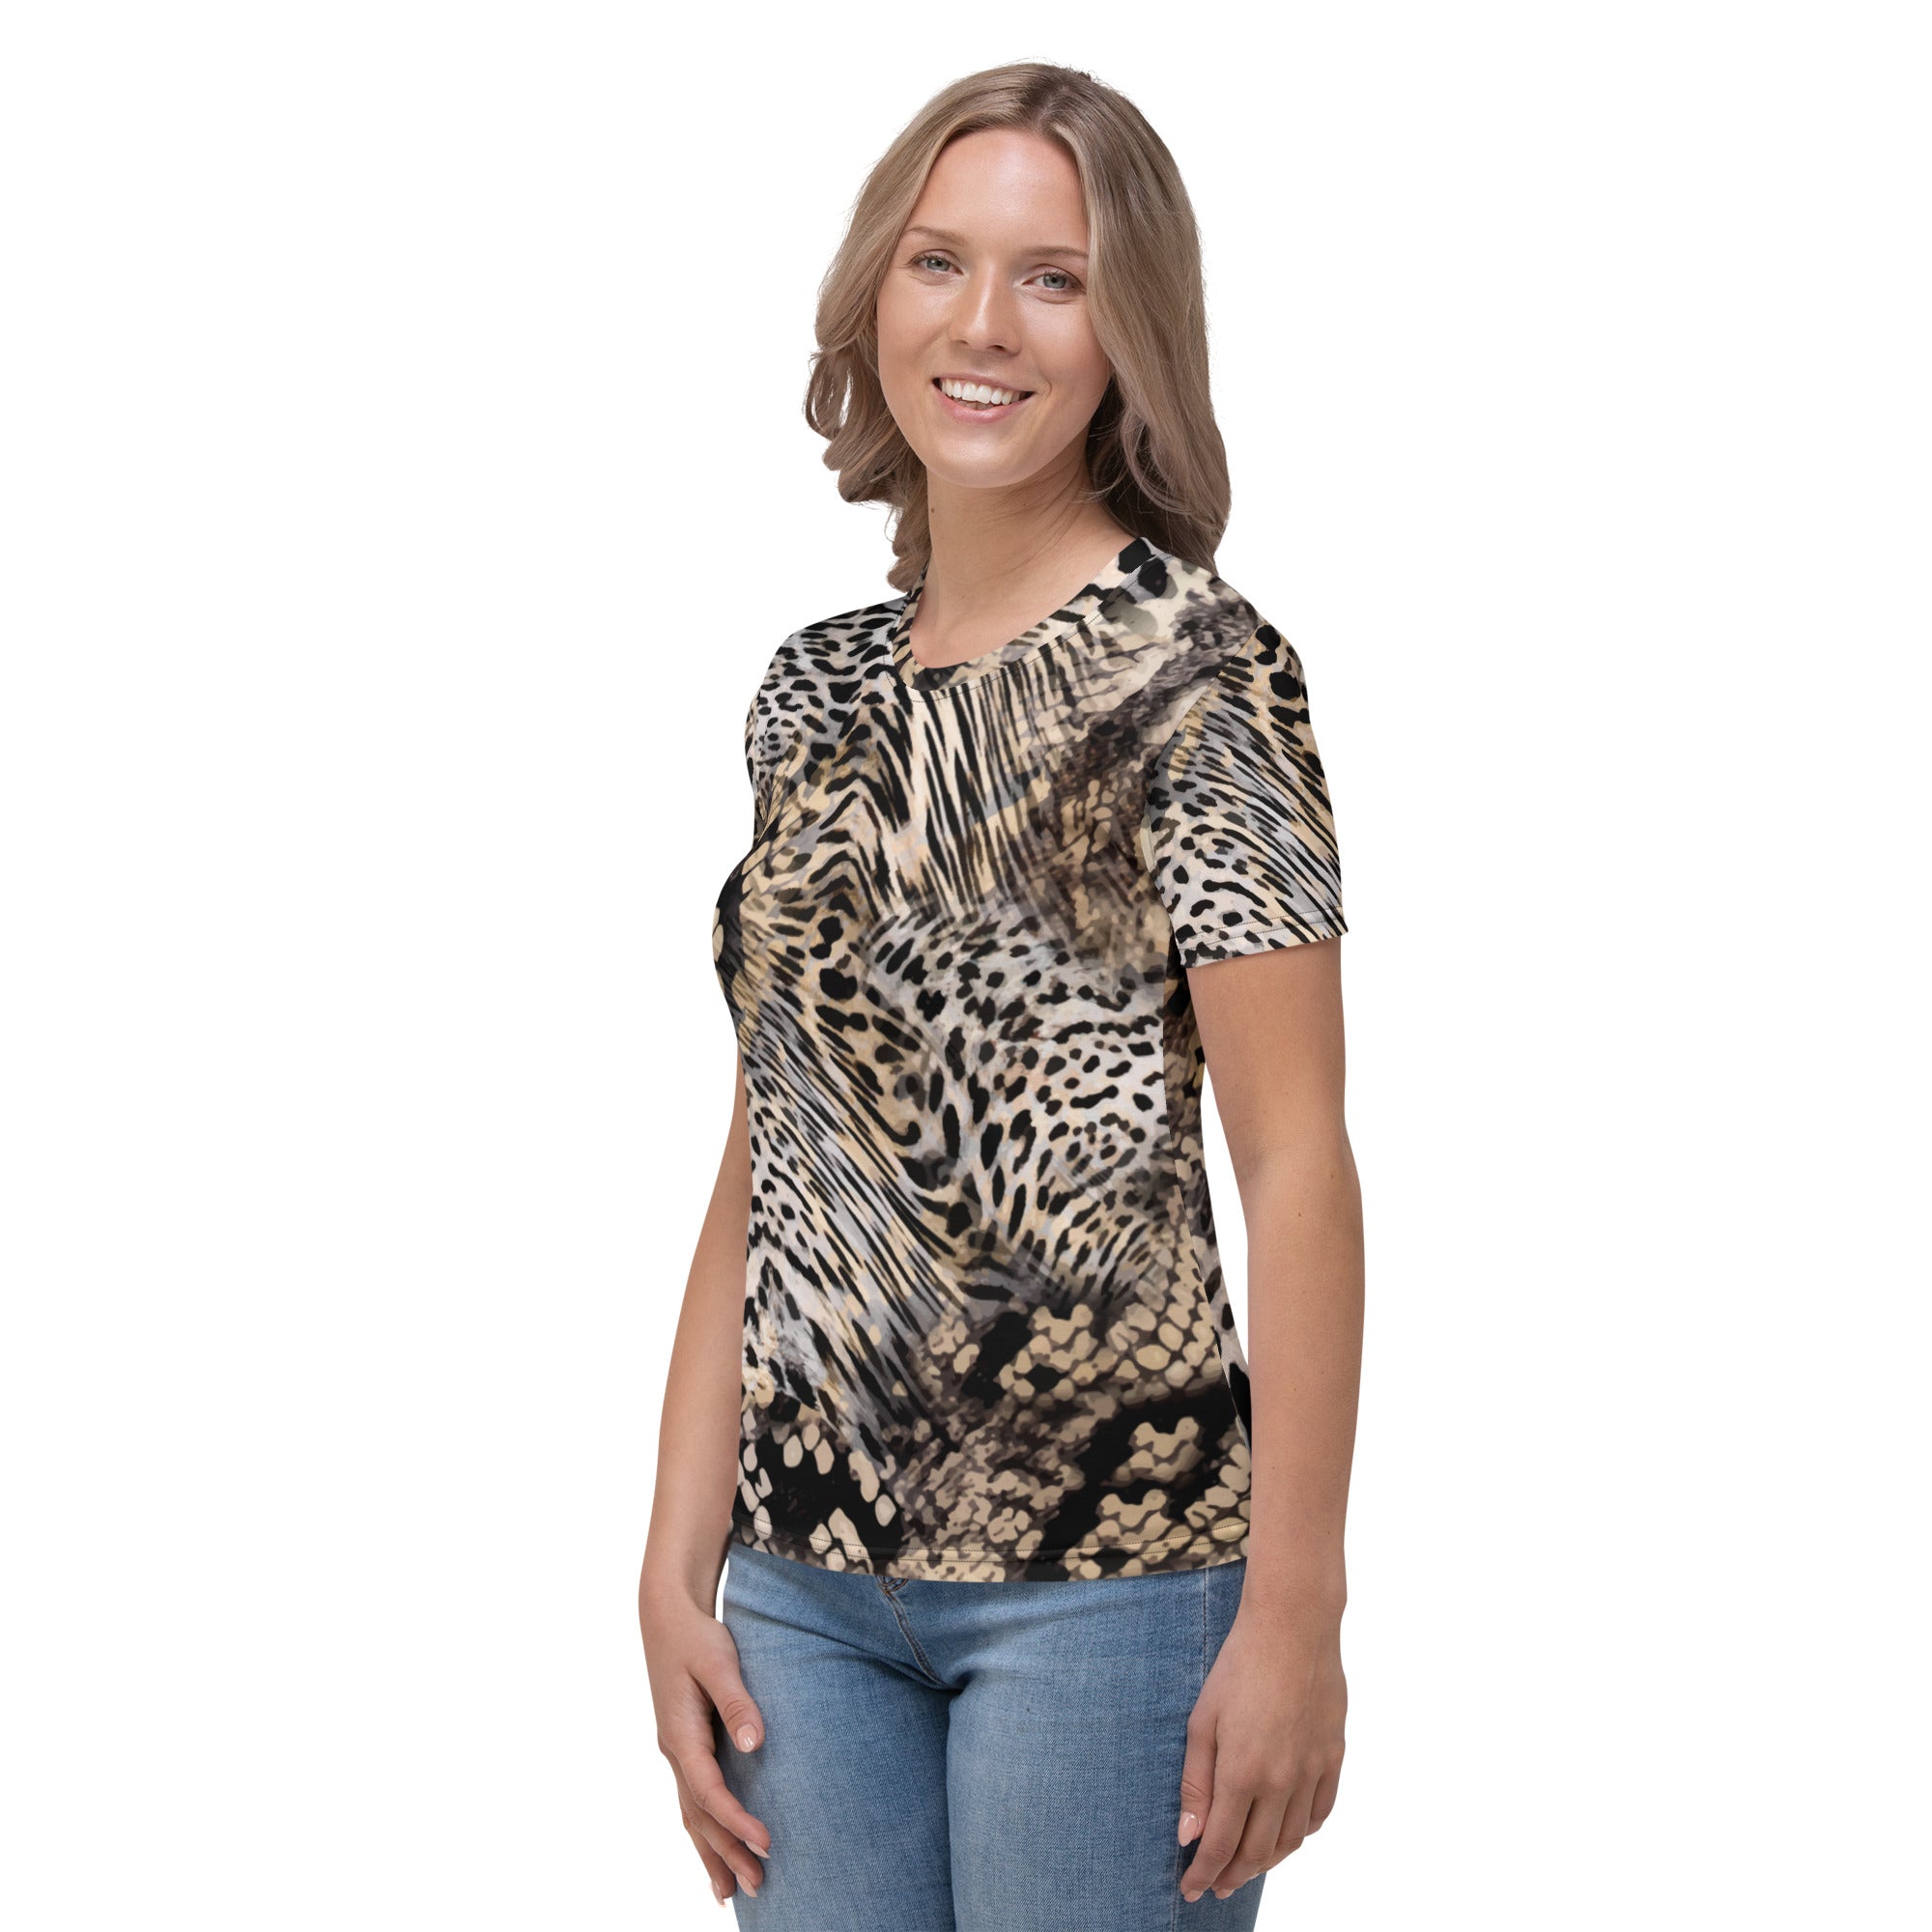 Leopard and Snake Skin Women's T-shirt